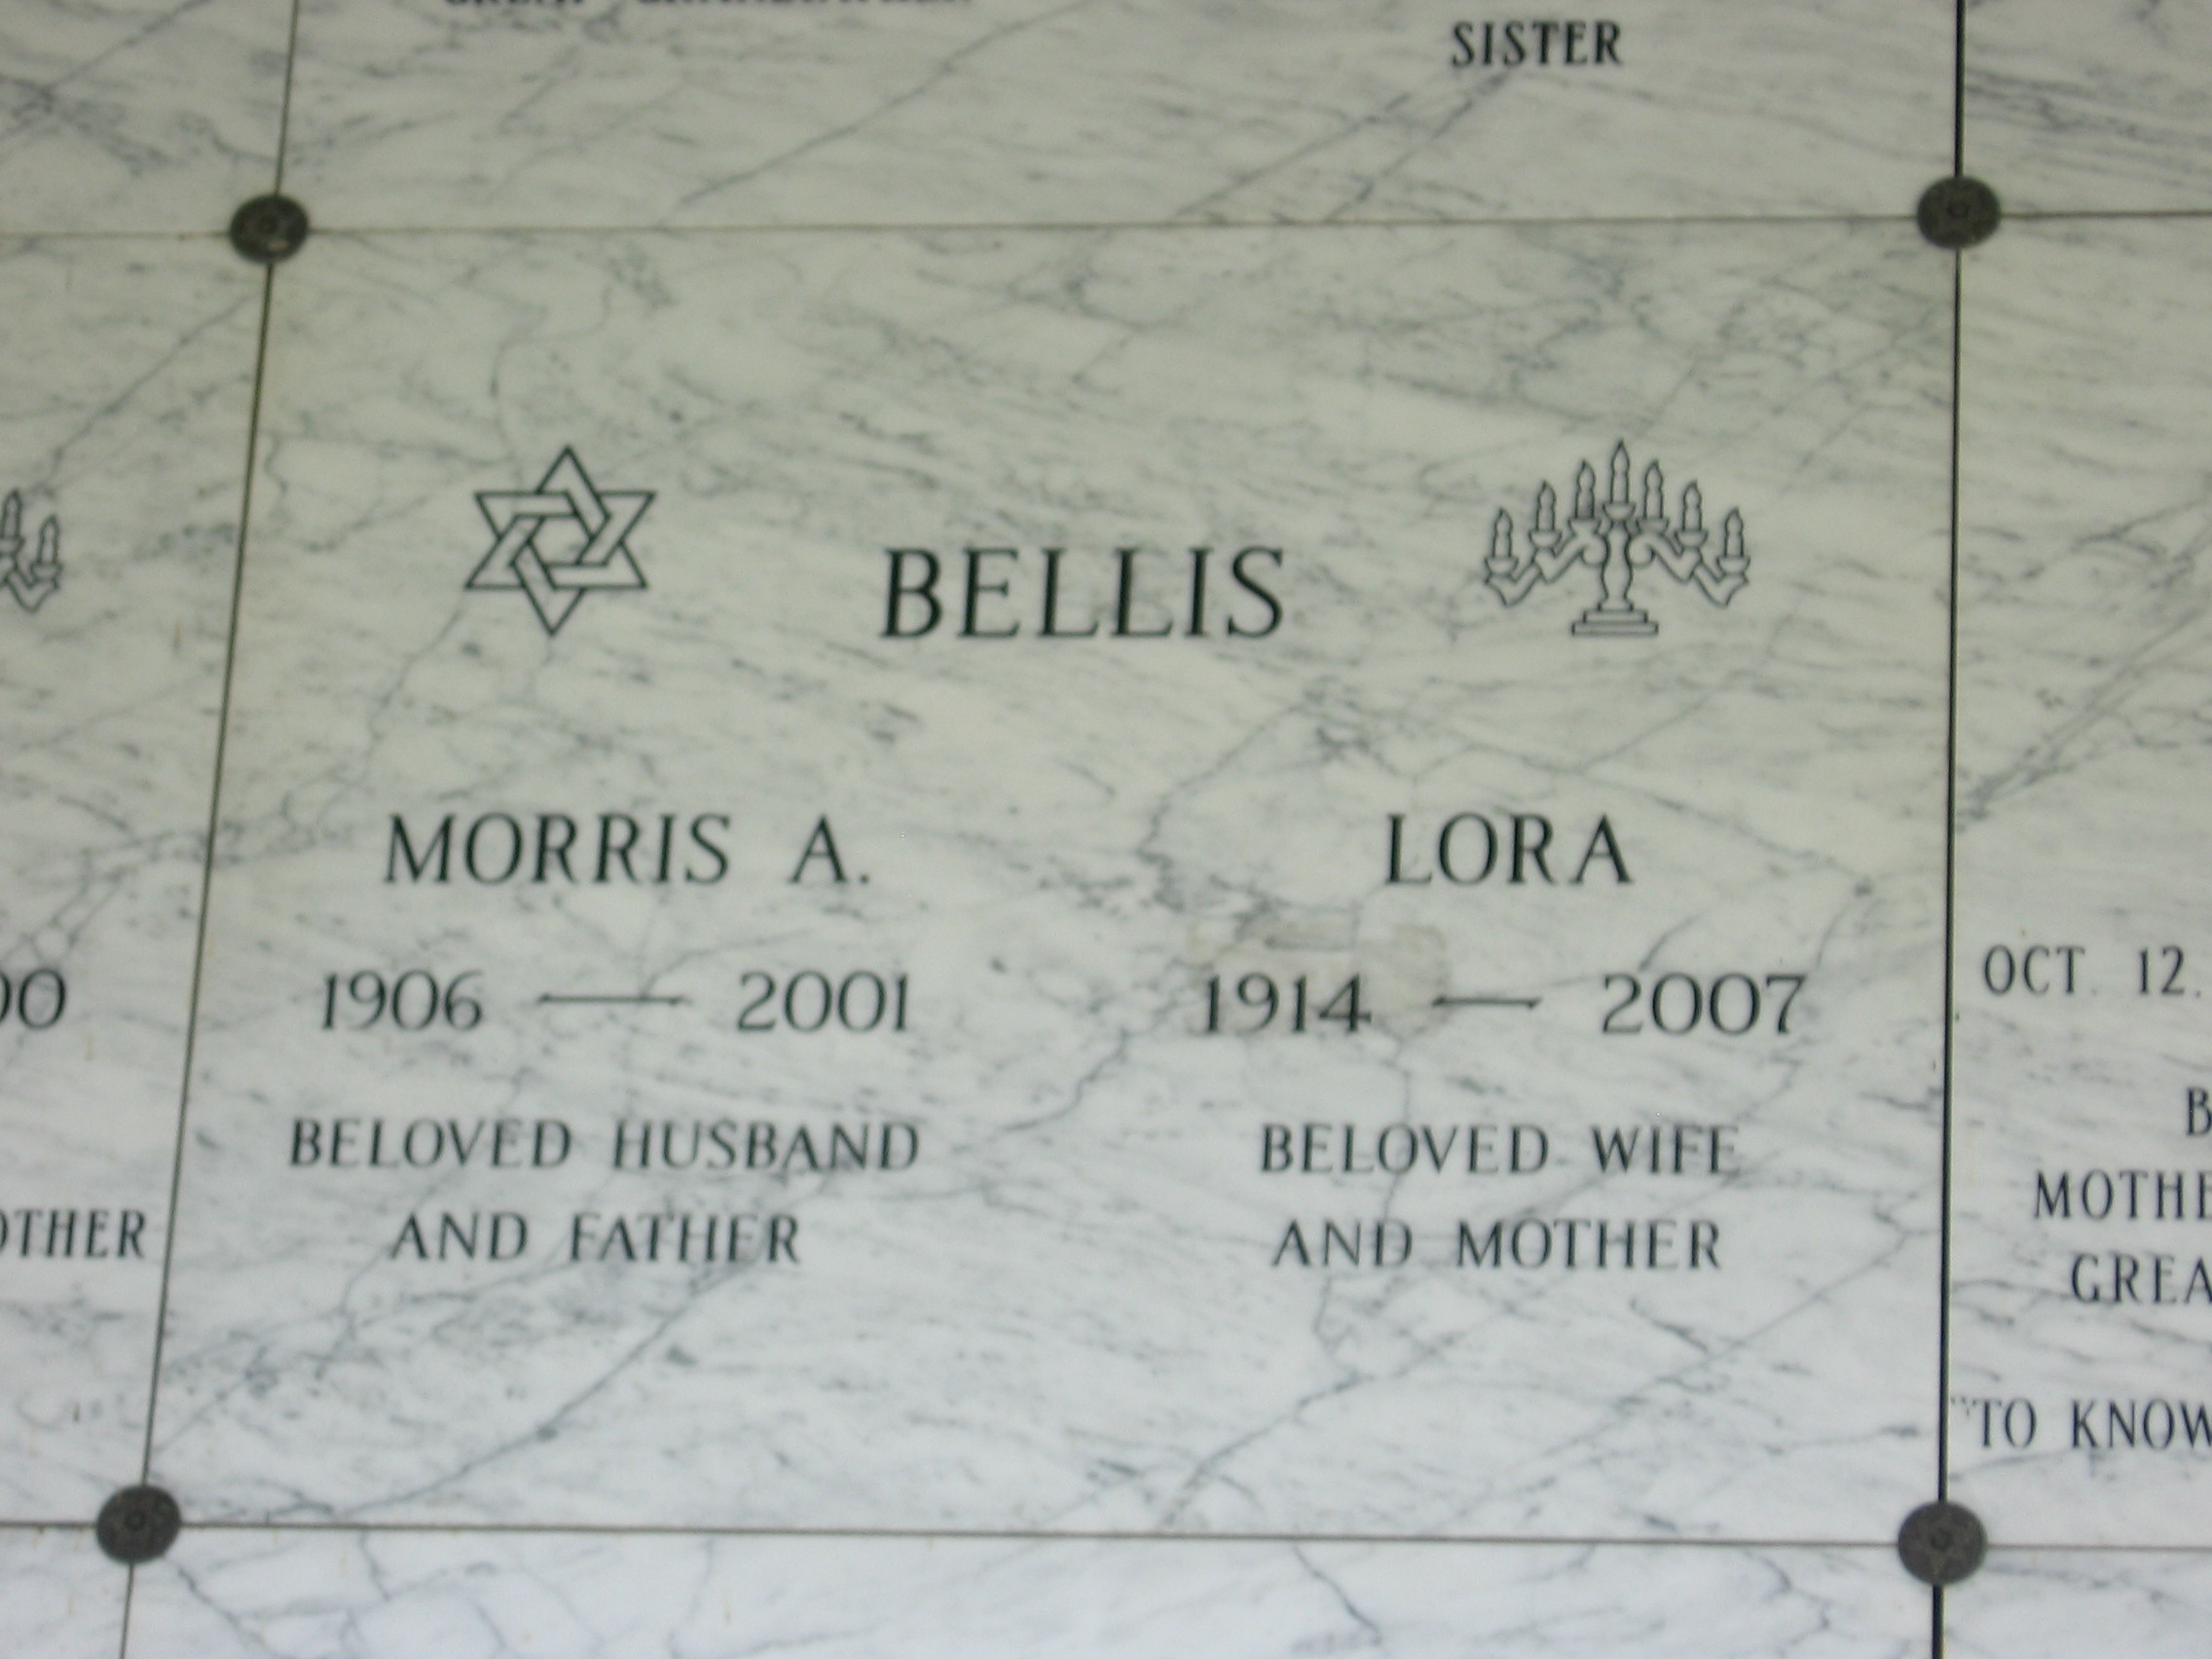 Morris A Bellis